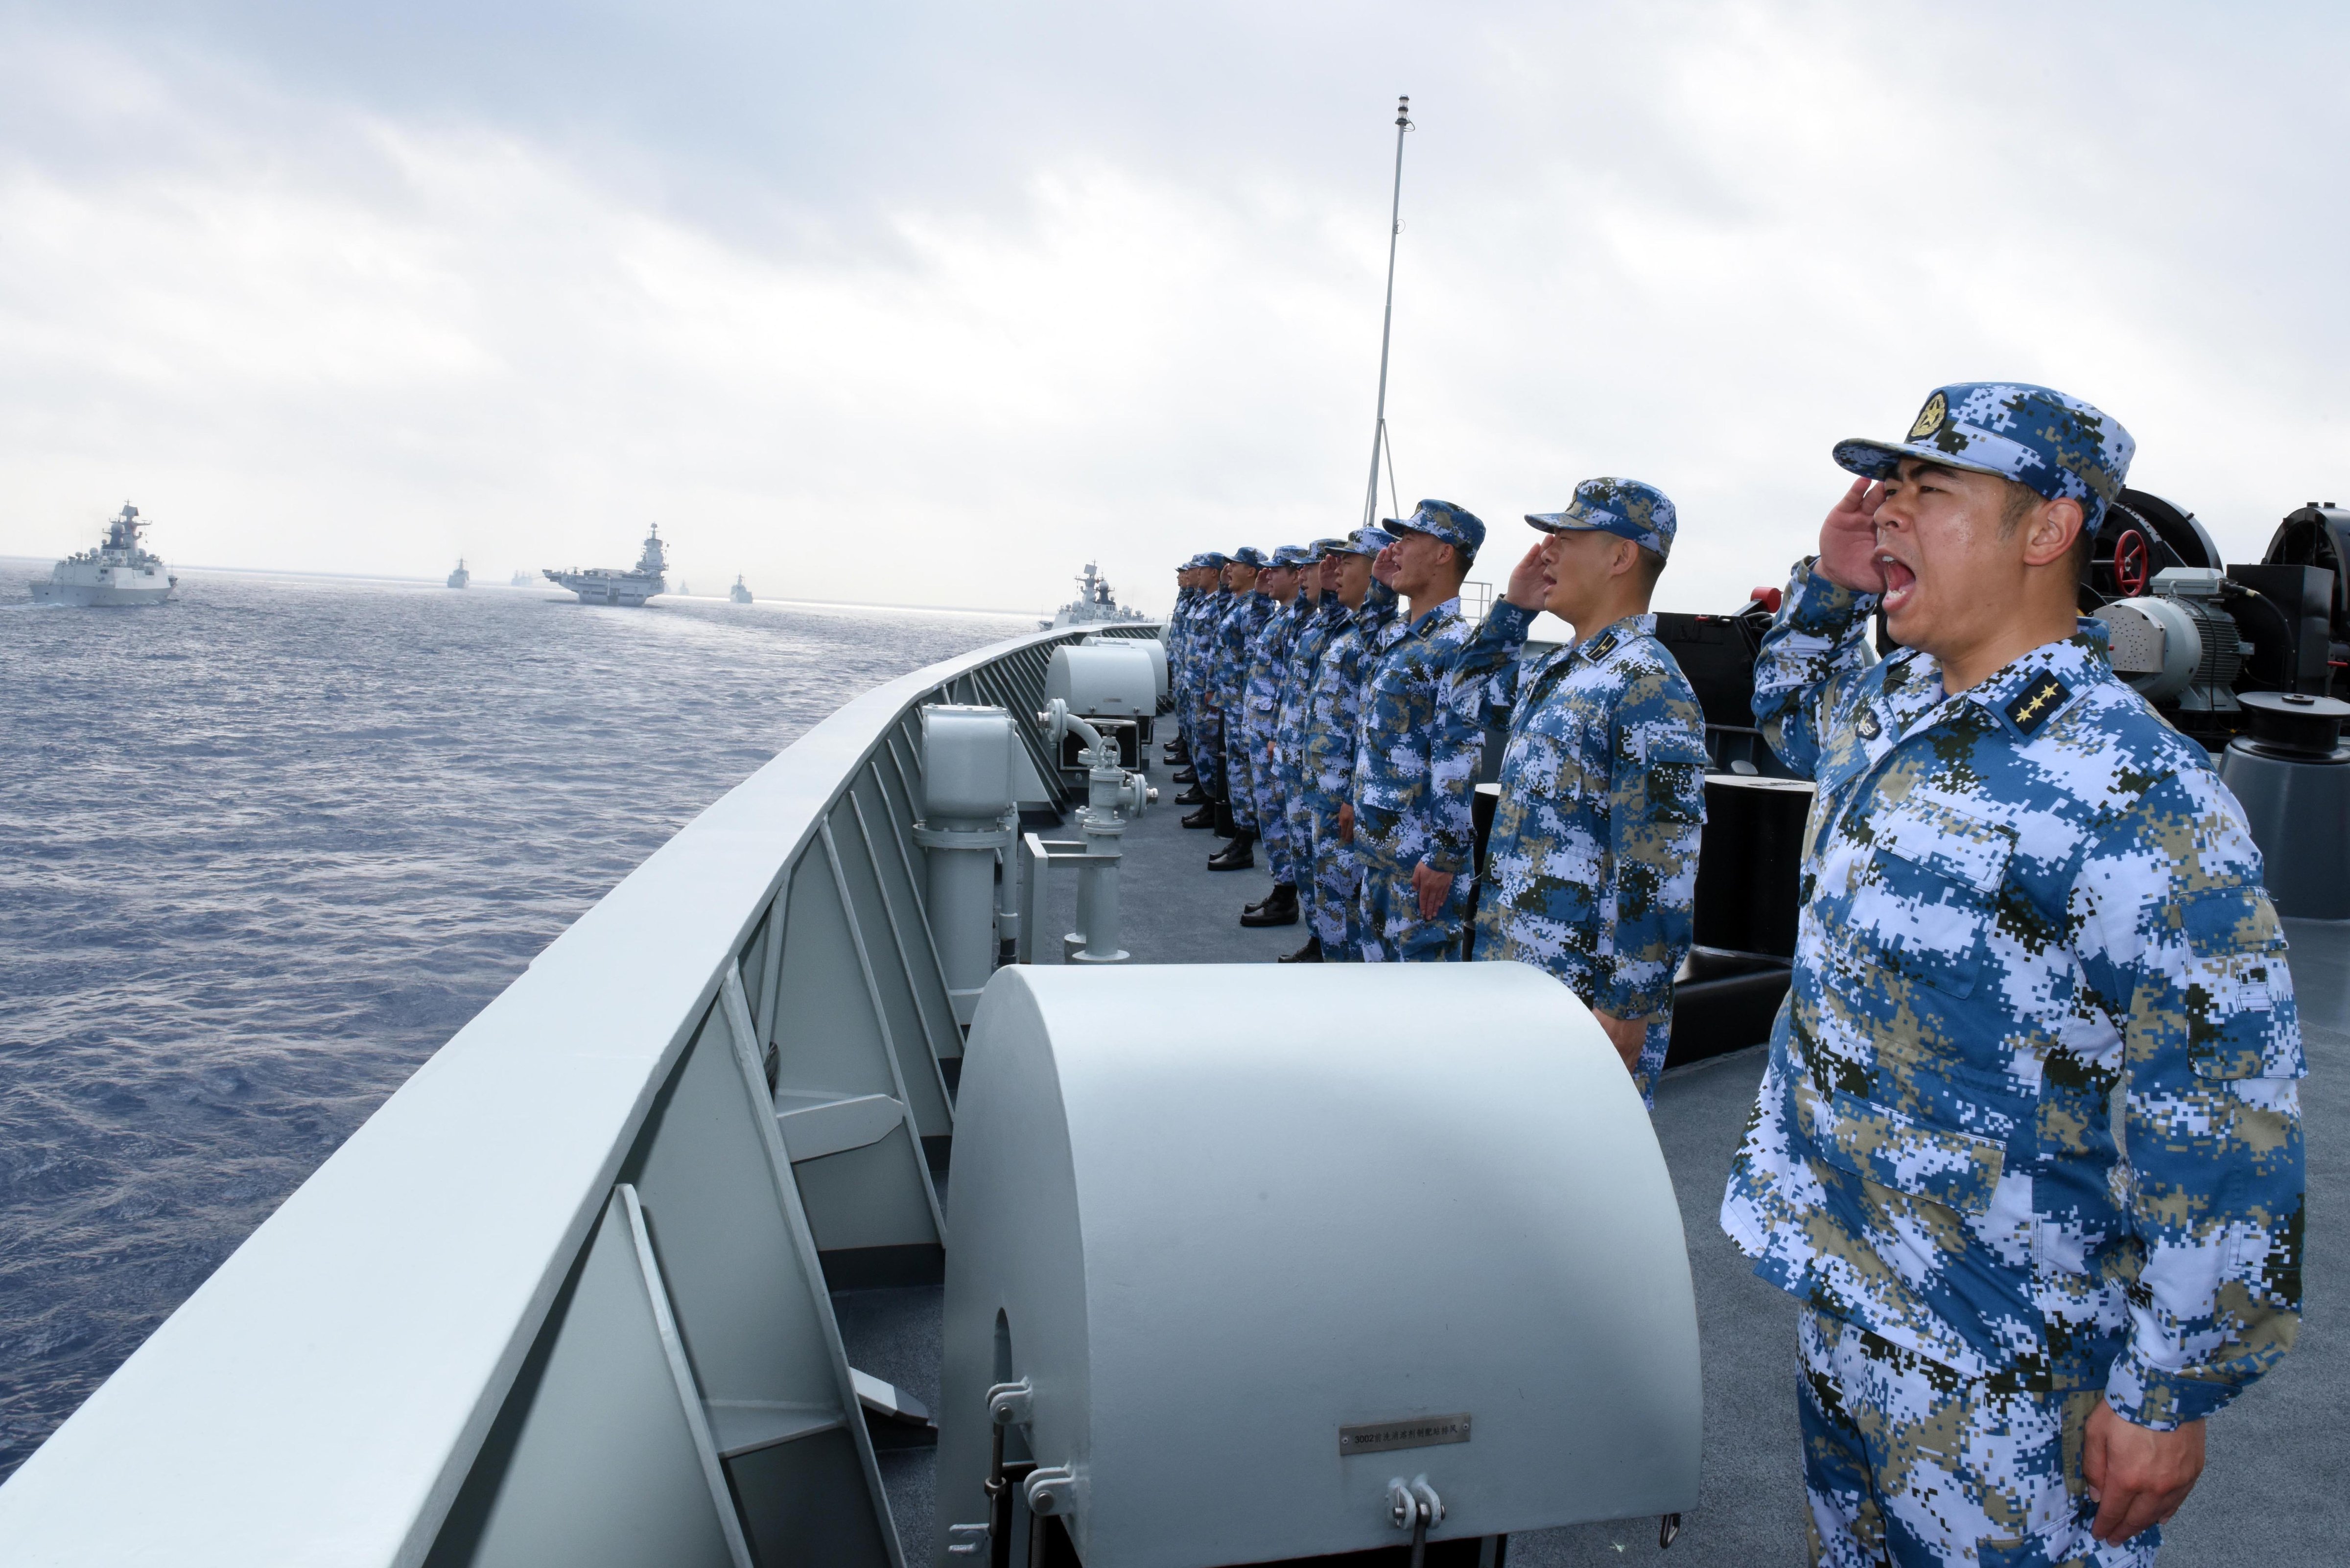 President Xi Jinping Reviews Navy In South China Sea